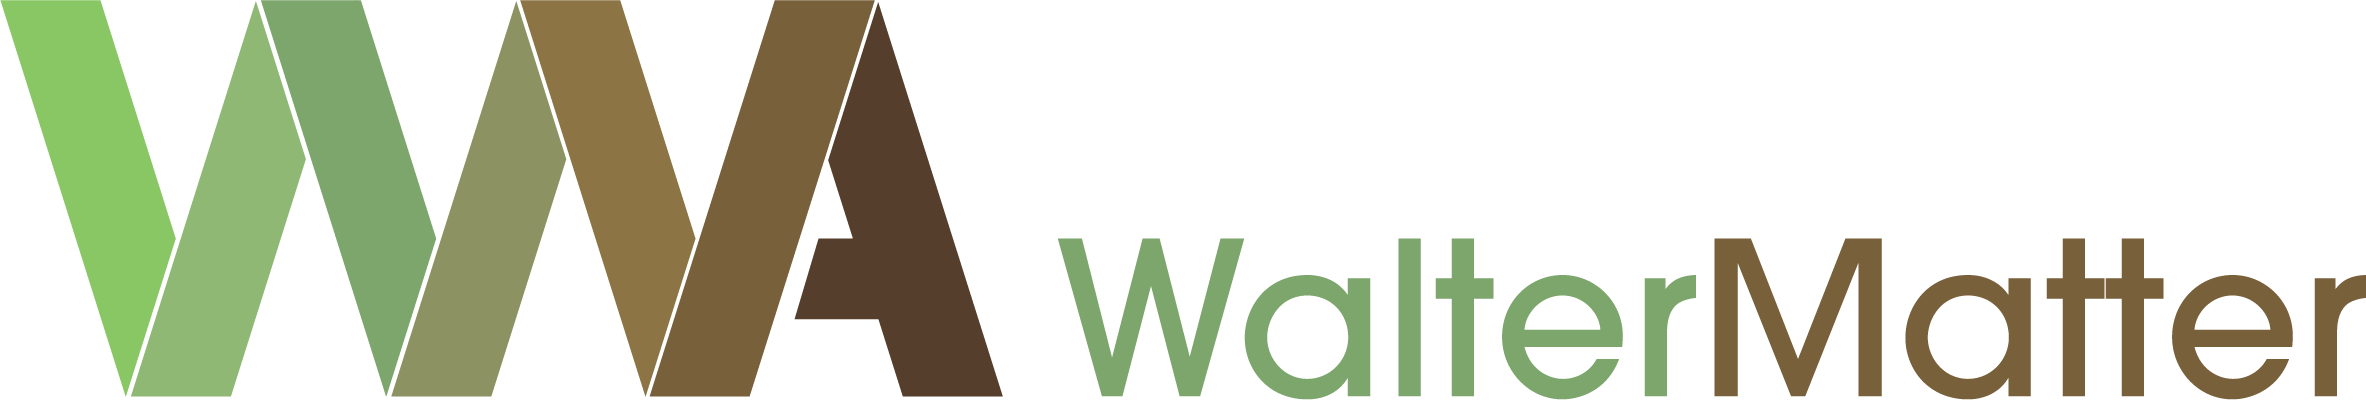 Walter Matter logo